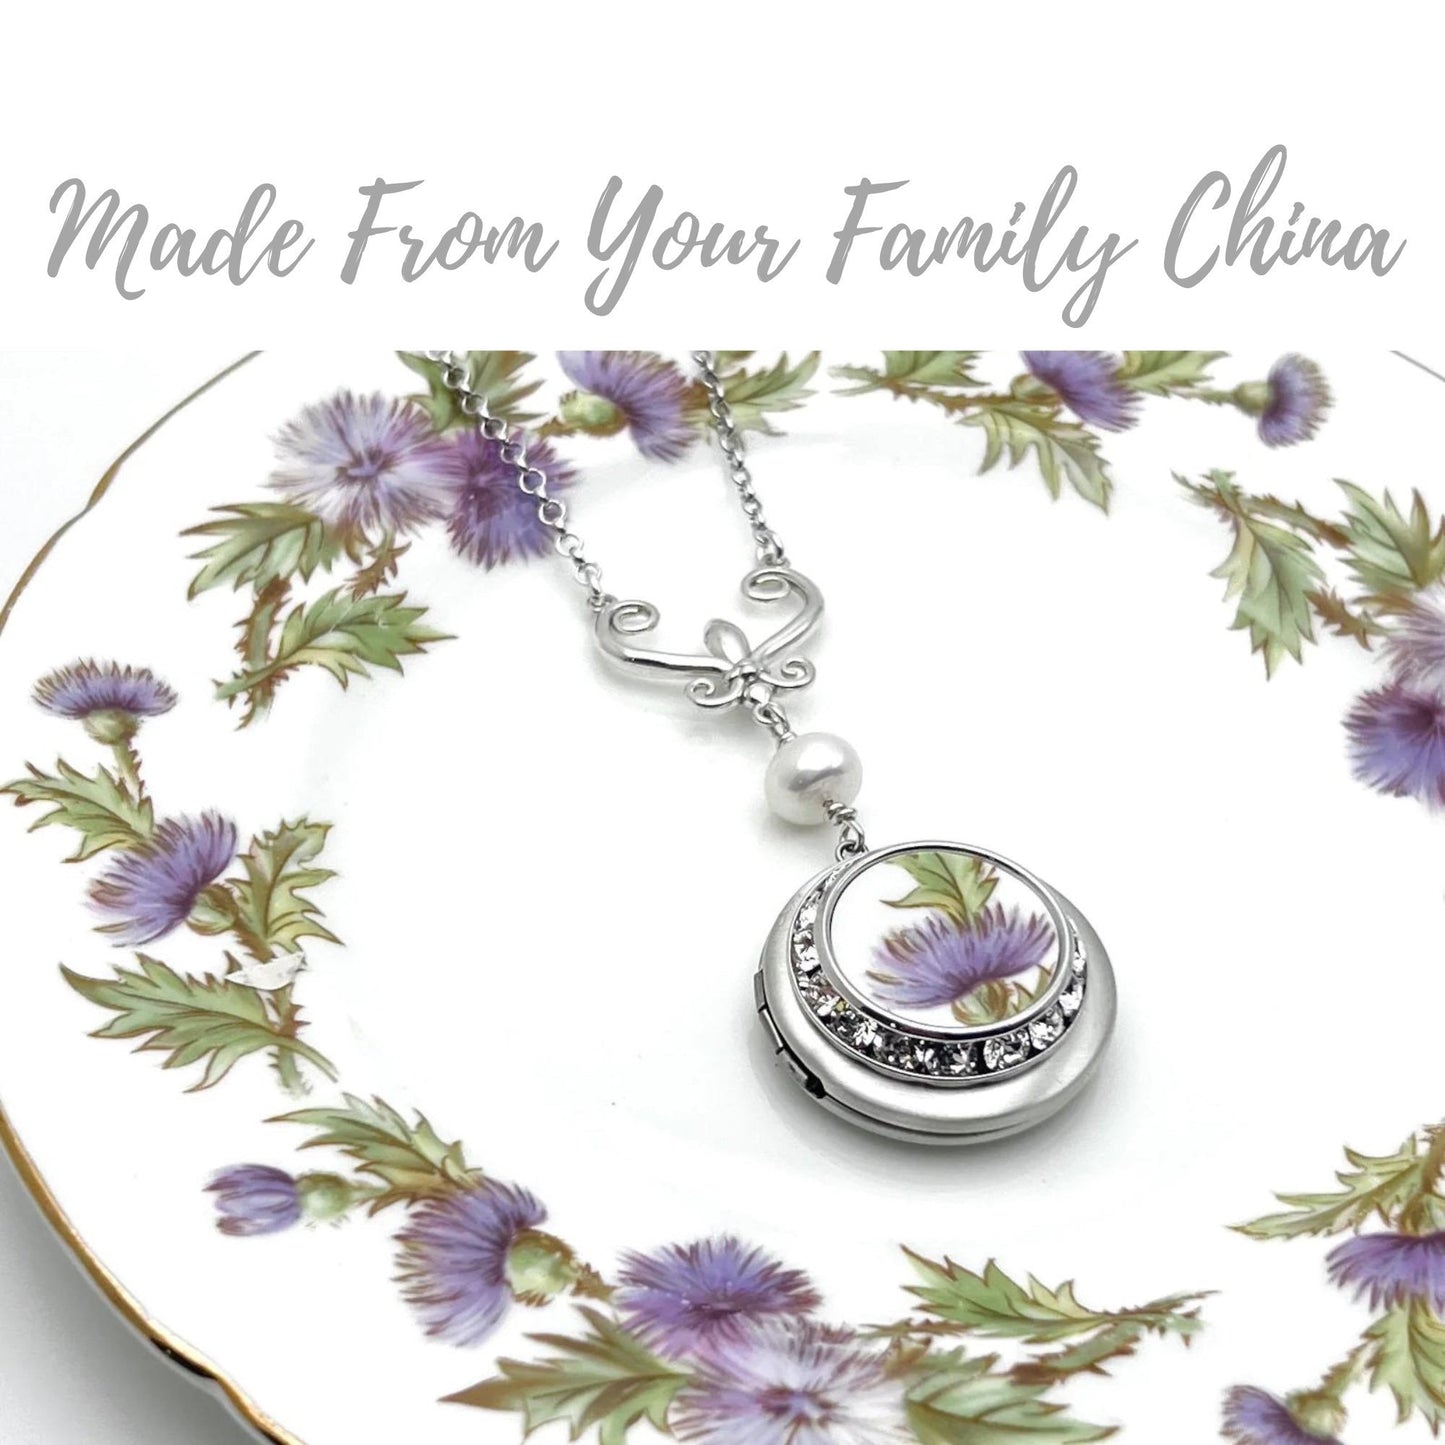 CUSTOM ORDER China Locket Necklace, Broken China Jewelry Photo Locket, Unique Family Gifts for Mom, Custom Jewelry